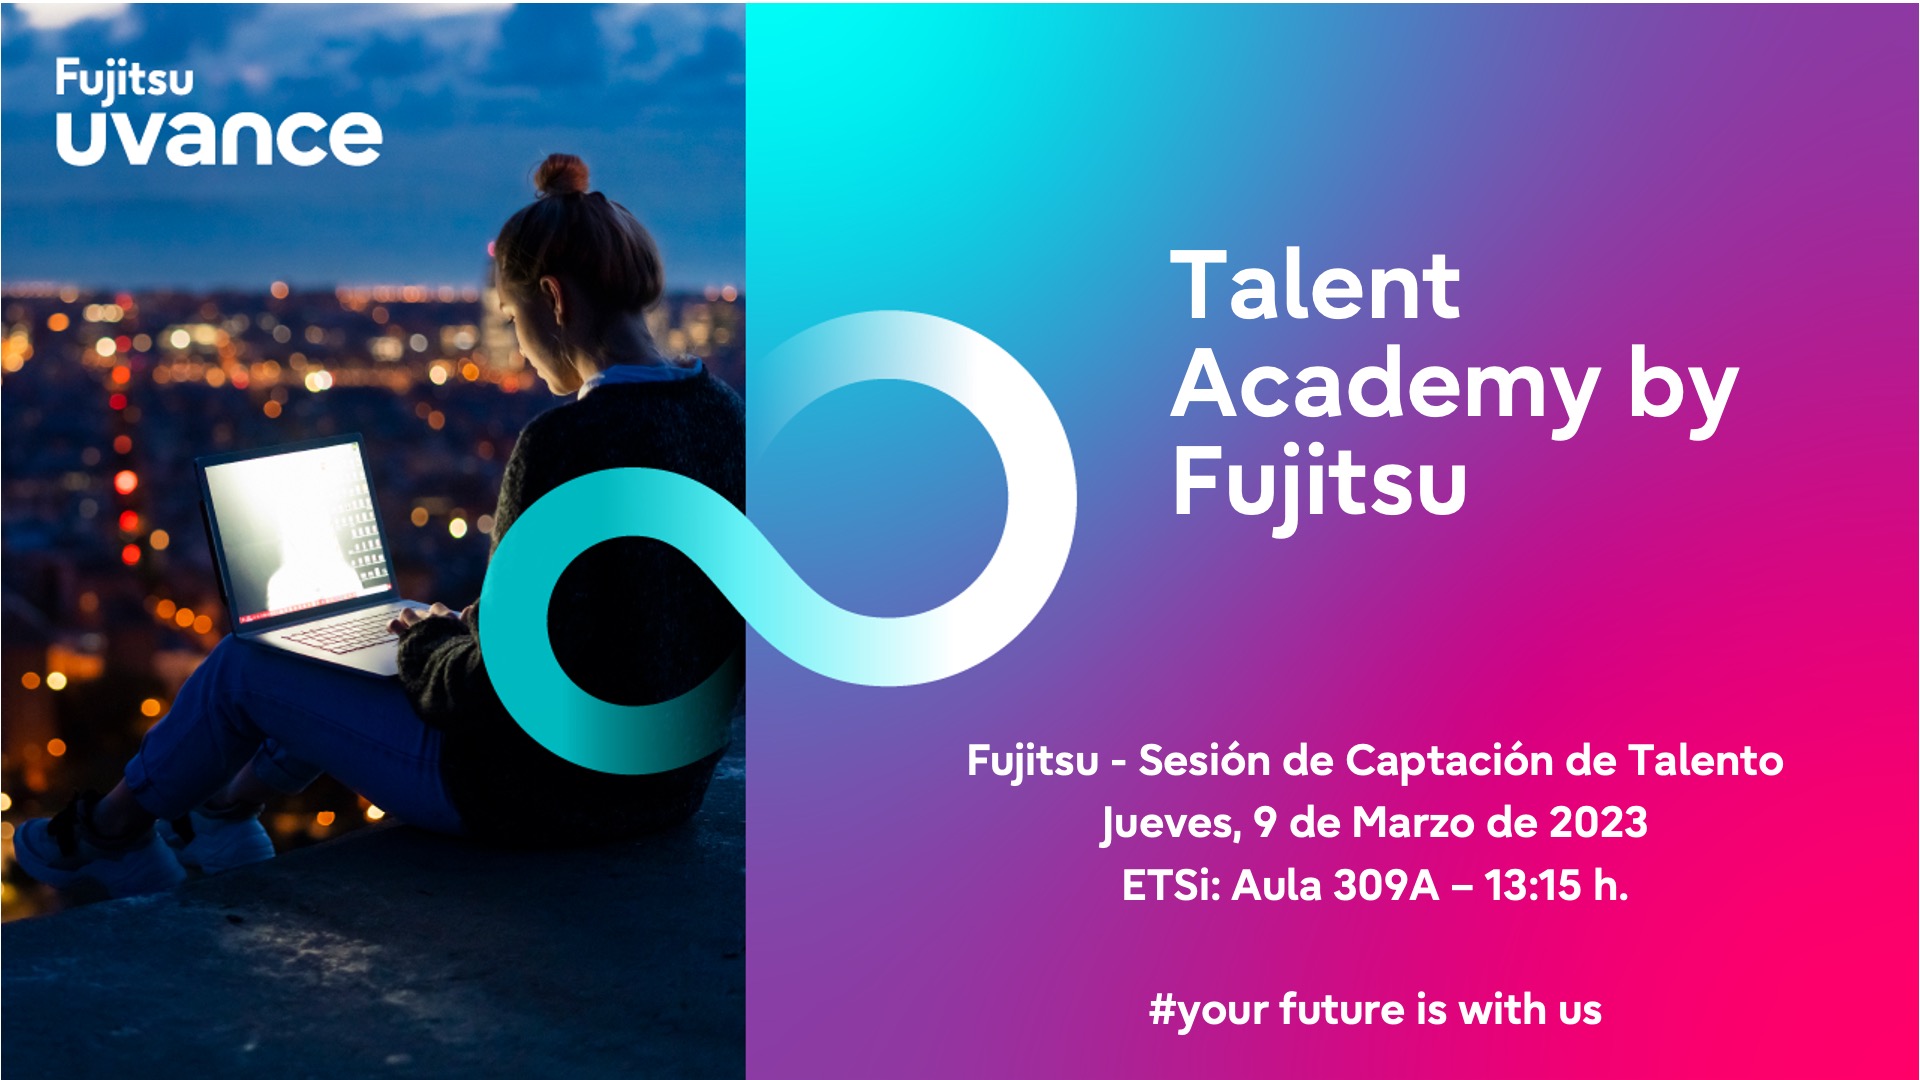 Talent Academy by Fujitsu